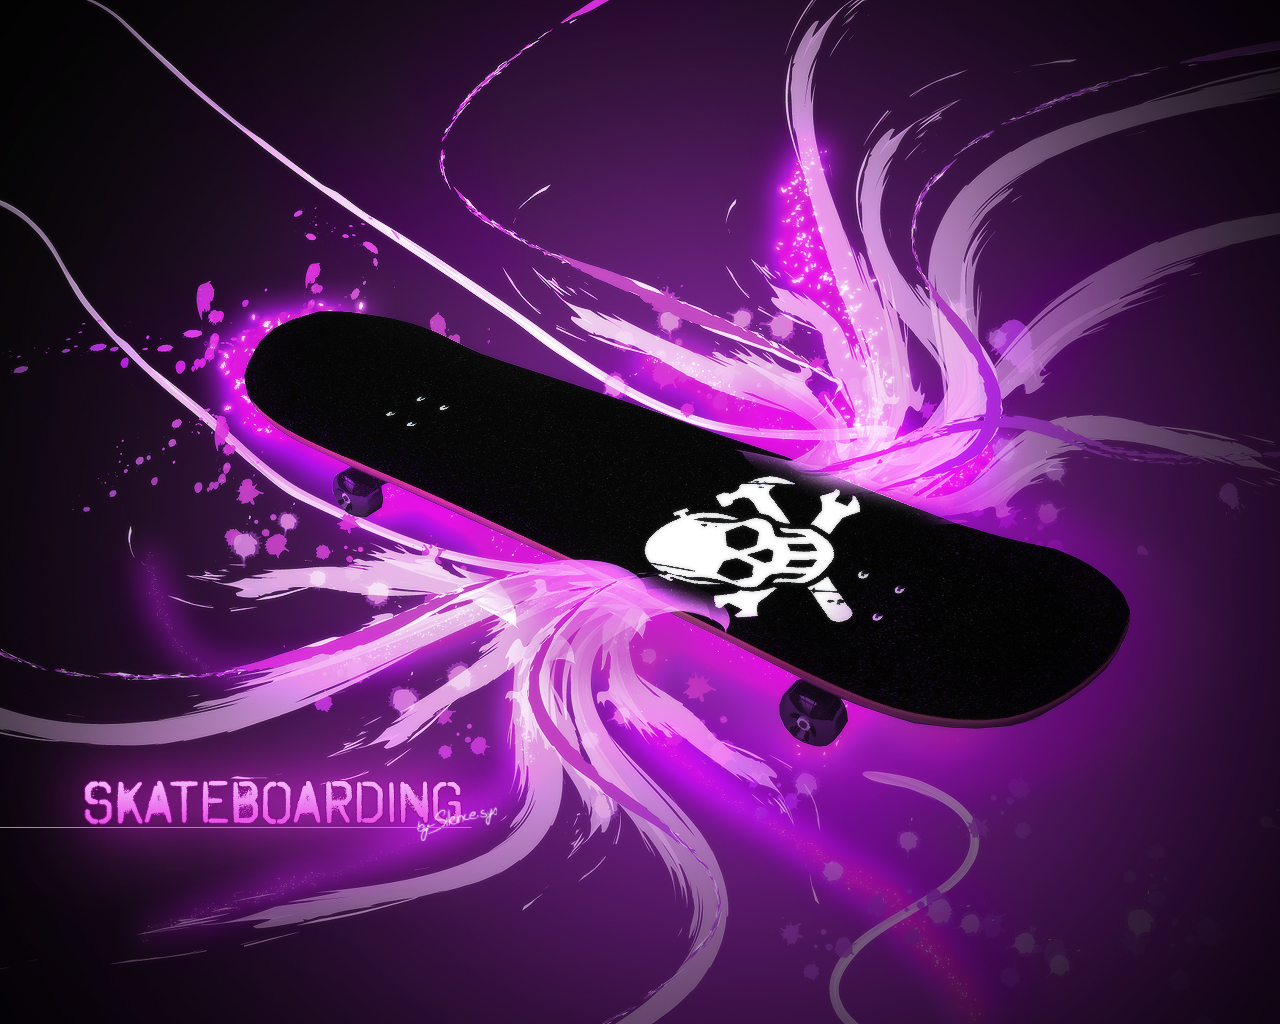 Download wallpaper 3840x2160 skateboard skate skater trick black and  white black 4k uhd 169 hd background